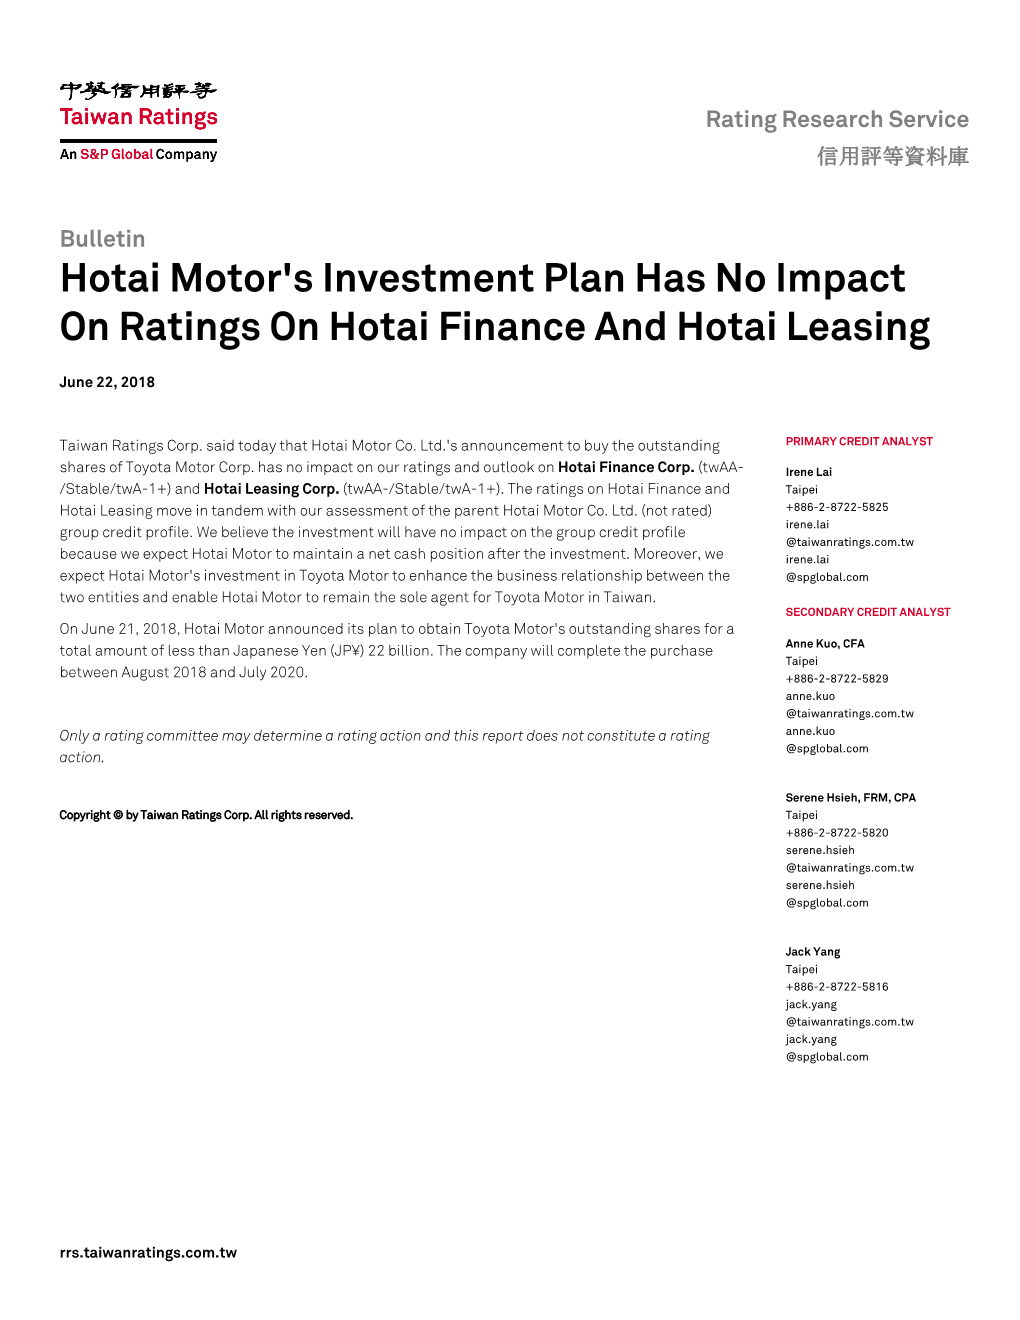 Hotai Motor's Investment Plan Has No Impact on Ratings on Hotai Finance and Hotai Leasing